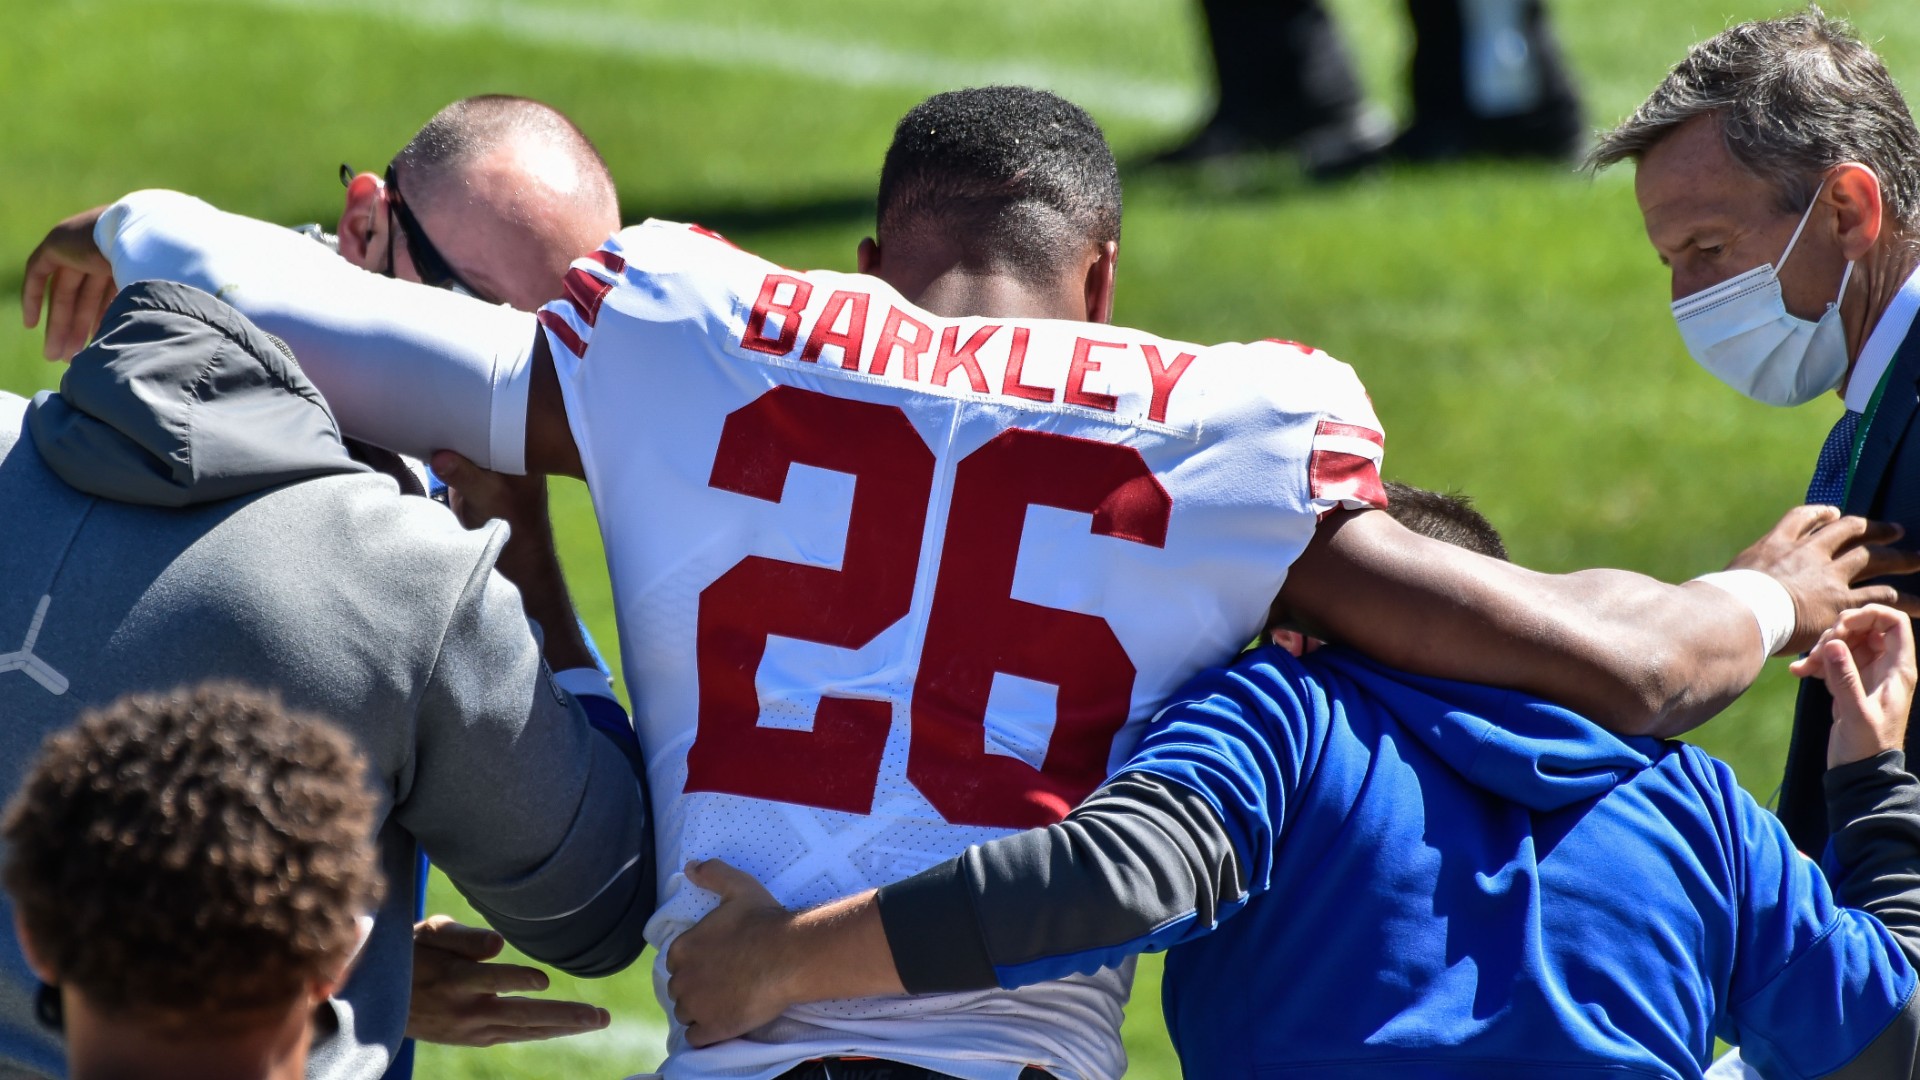 Giants Confirm Saquon Barkley Has Torn ACL